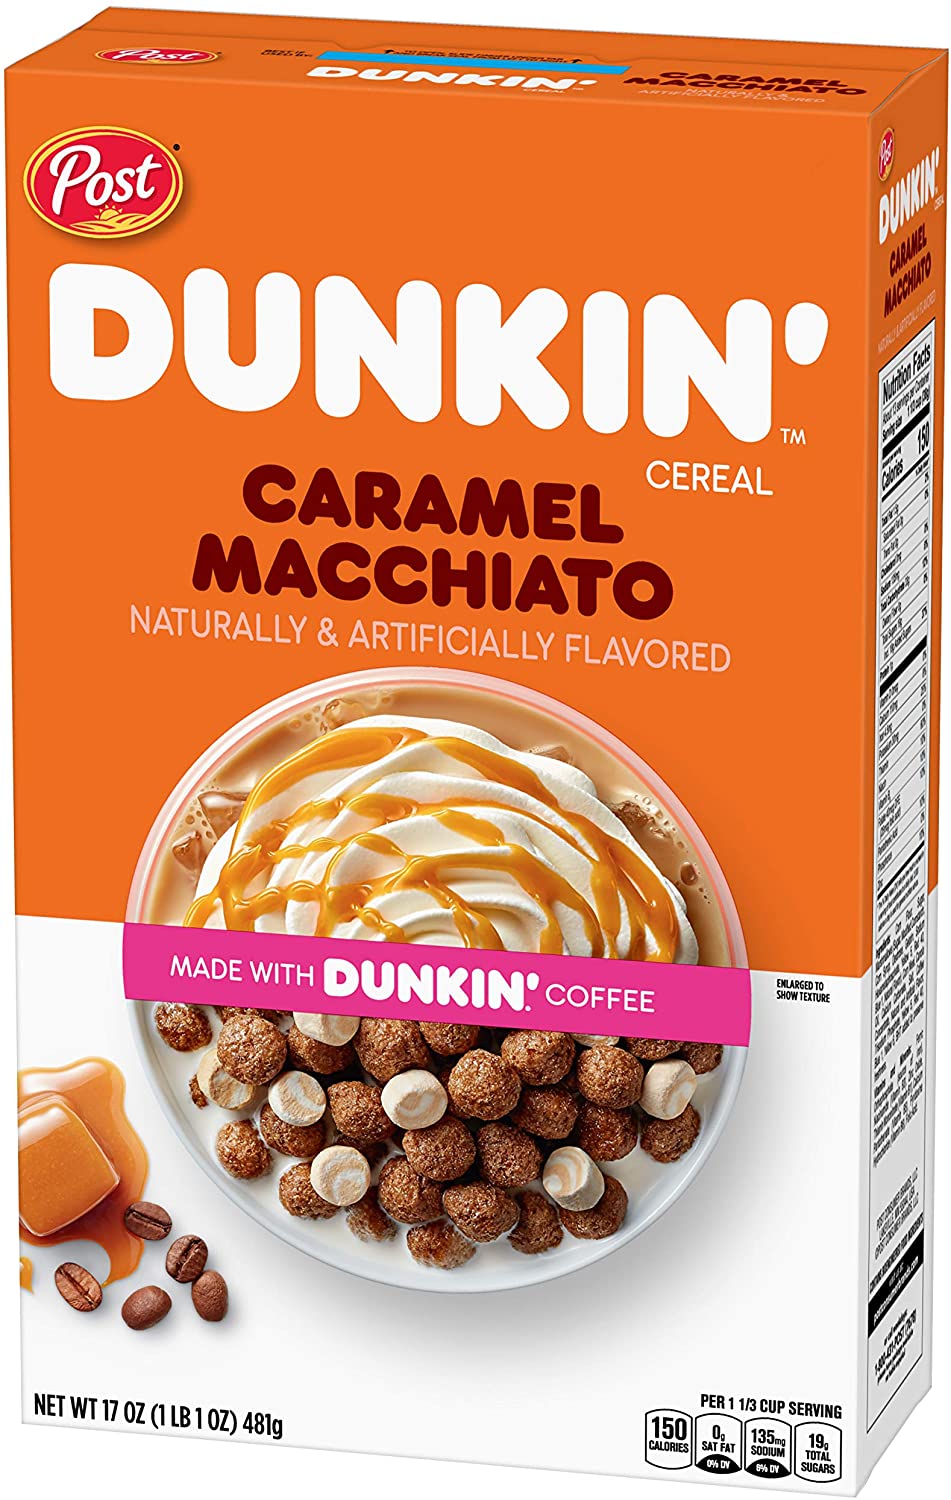 Post Dunkin Caramel Macchiato Cereal